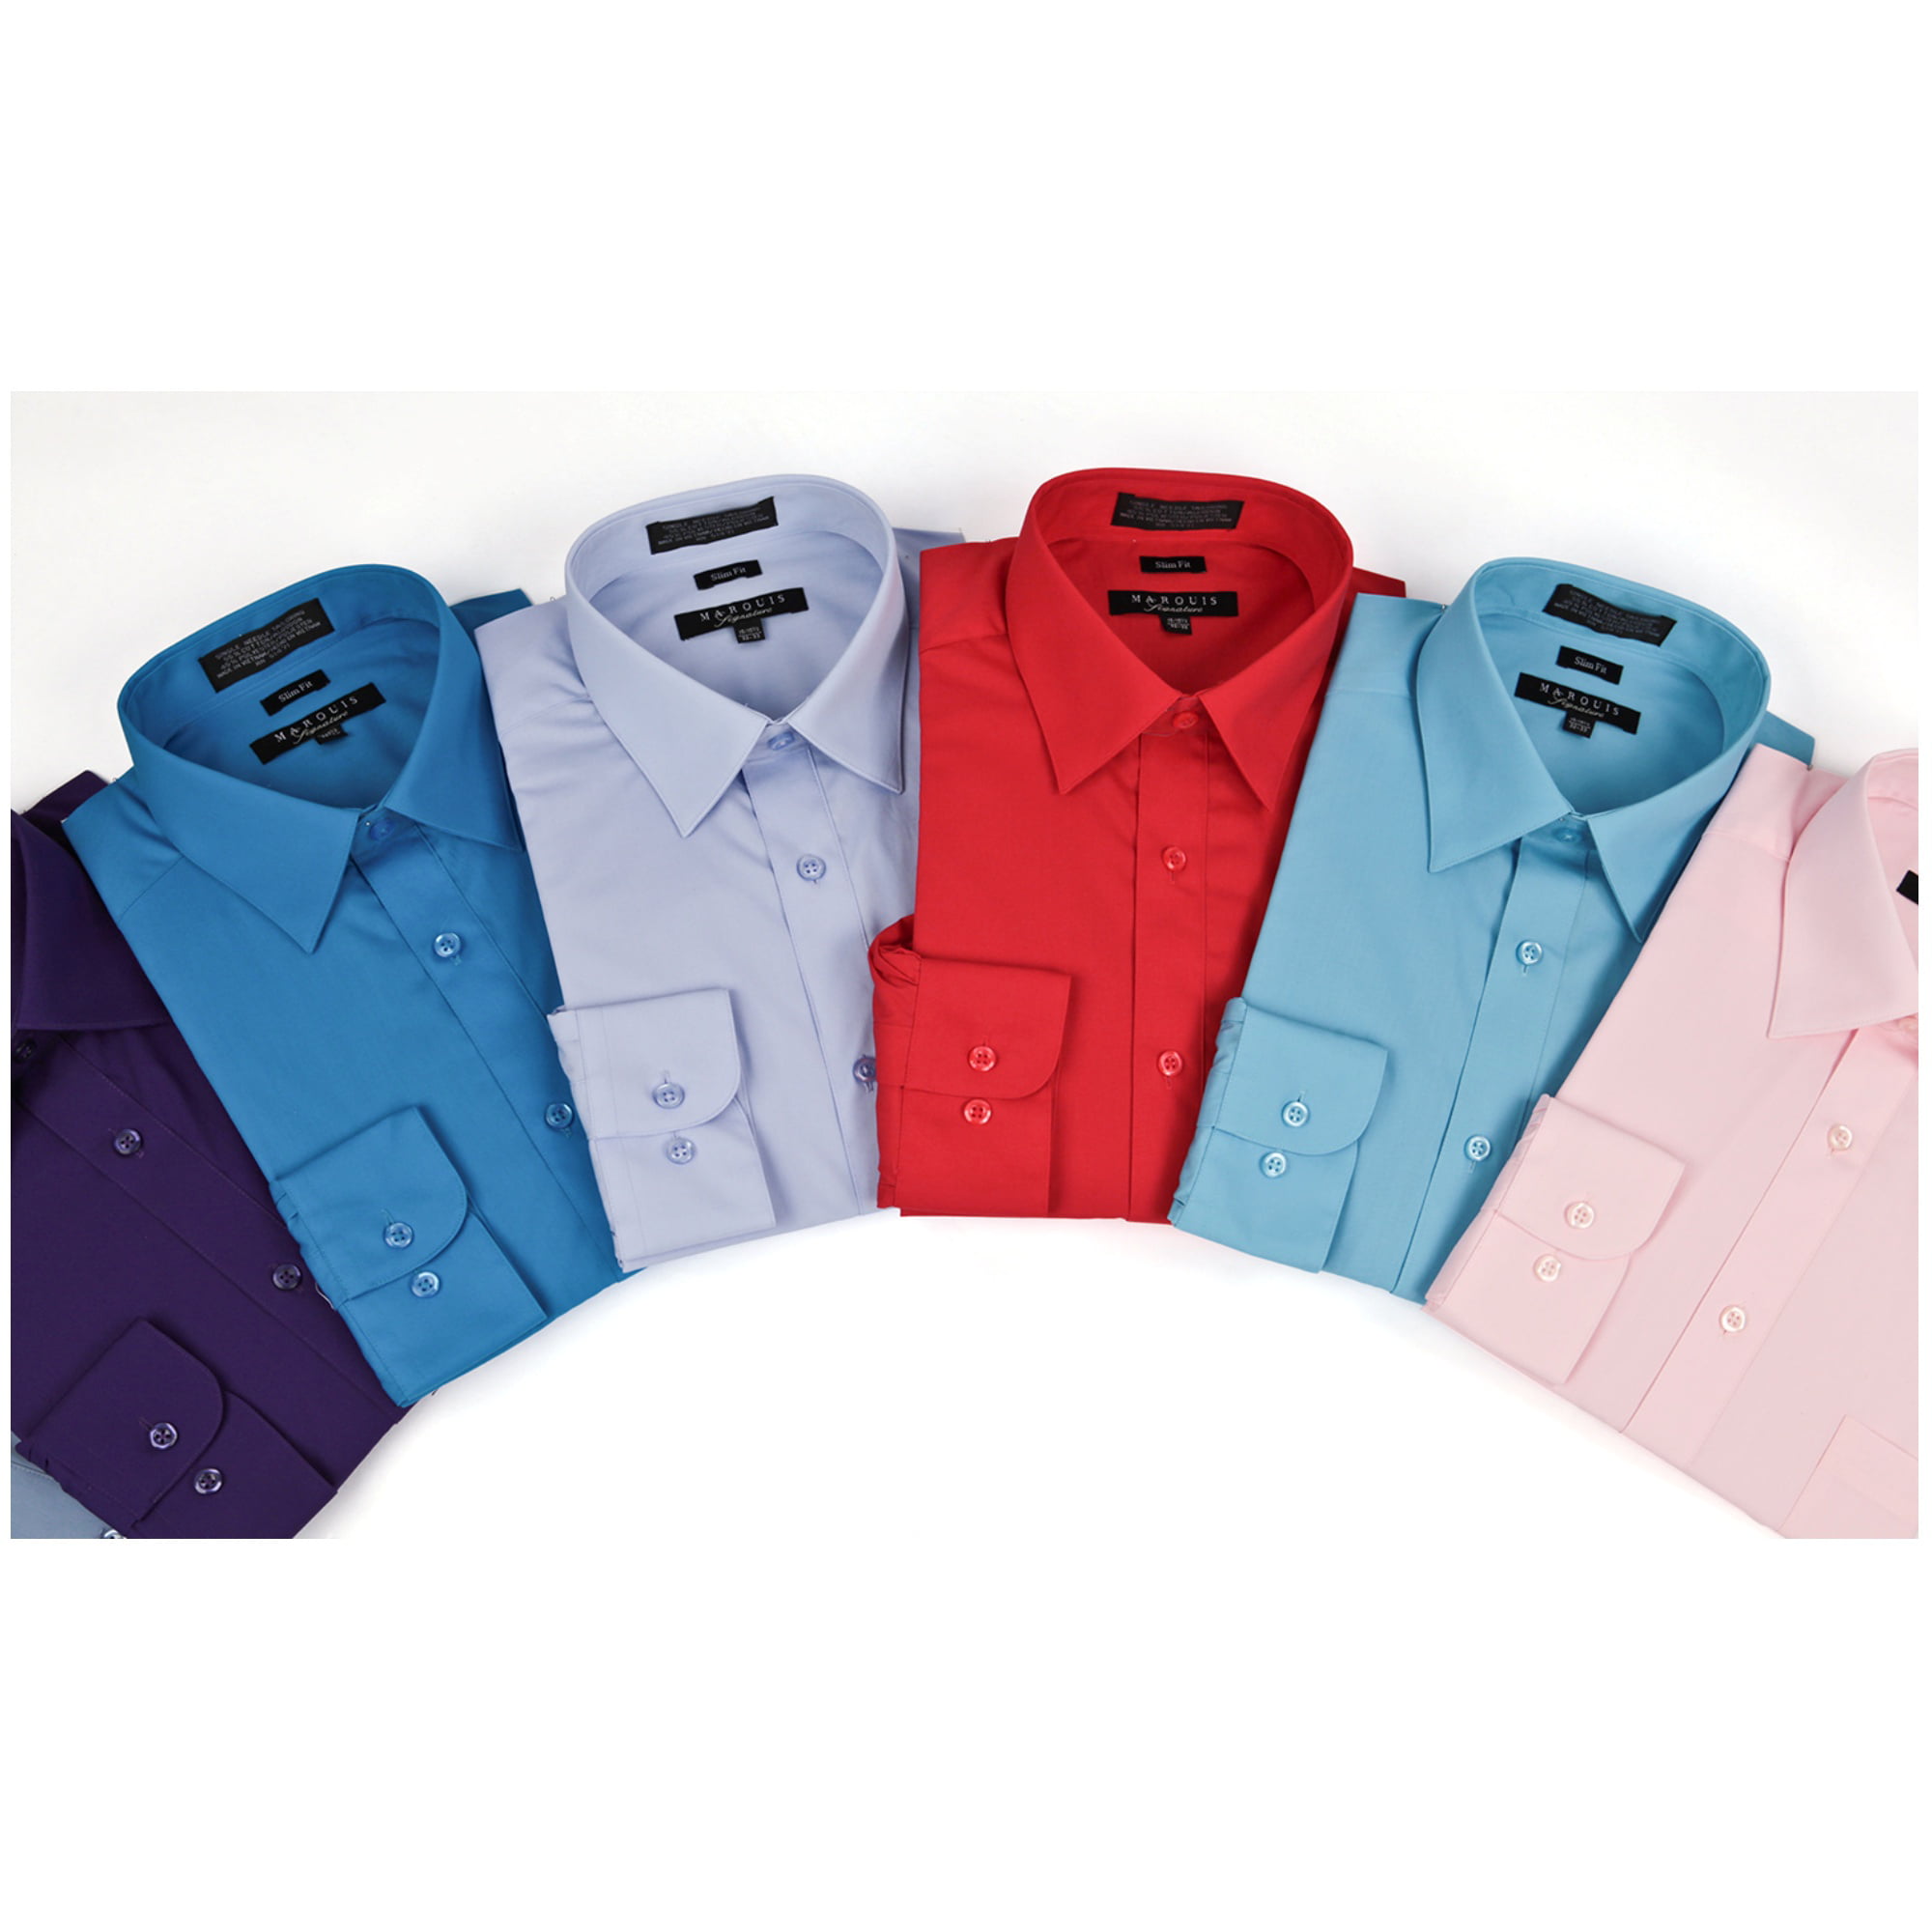 Steel Blue Classic Fit Long Sleeve Dress Shirt N 18.5, S 36-37